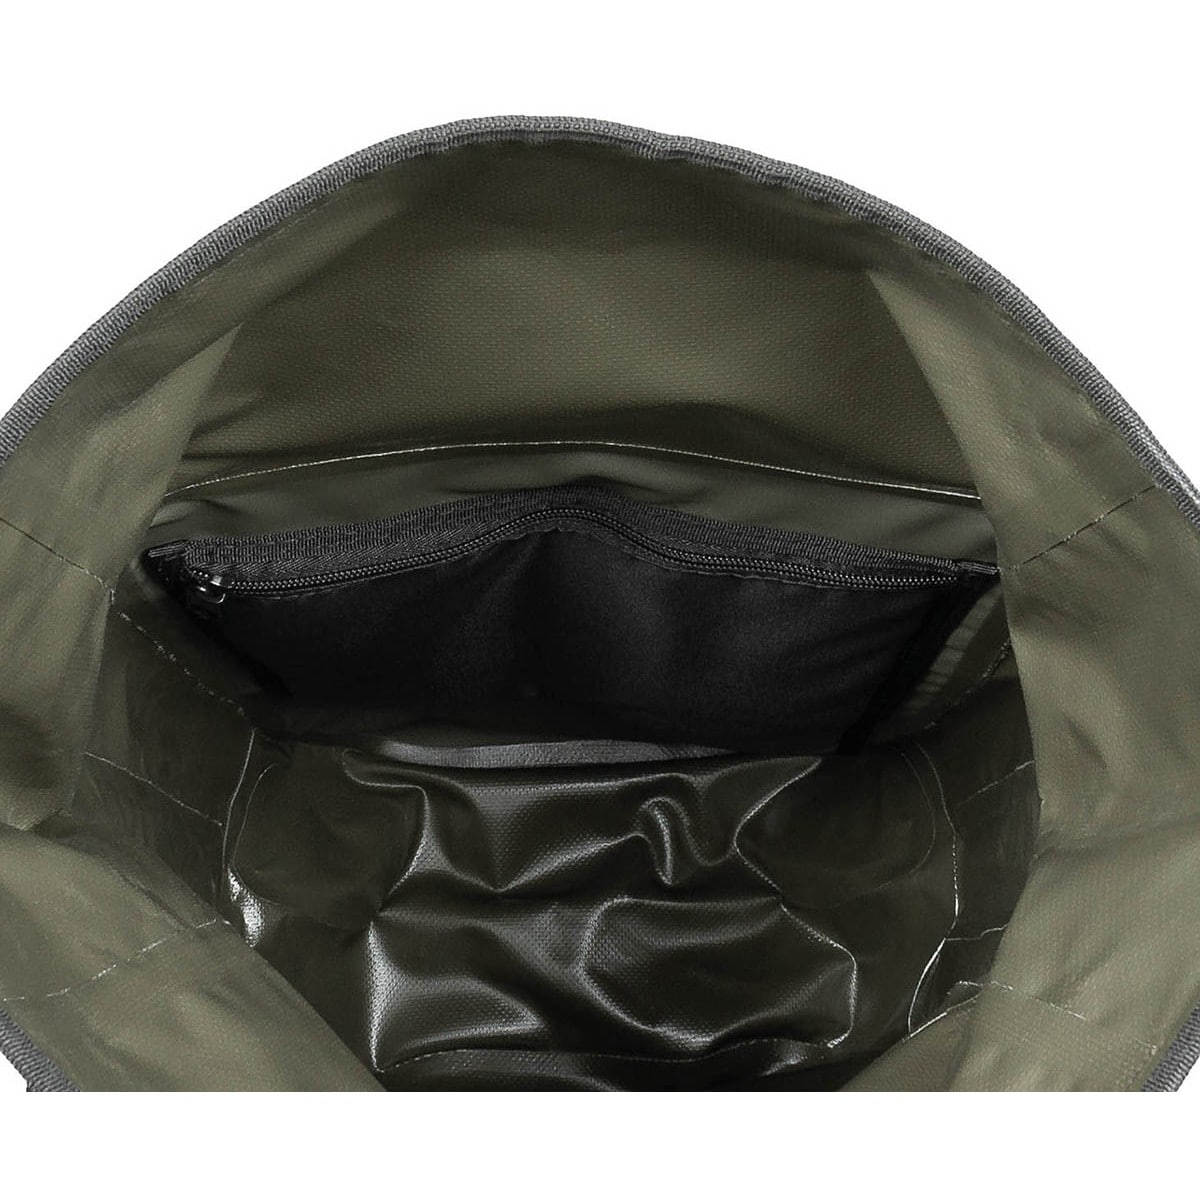 Plecak wodoodporny MFH Fox Outdoor Dry Pack 30 l - Olive